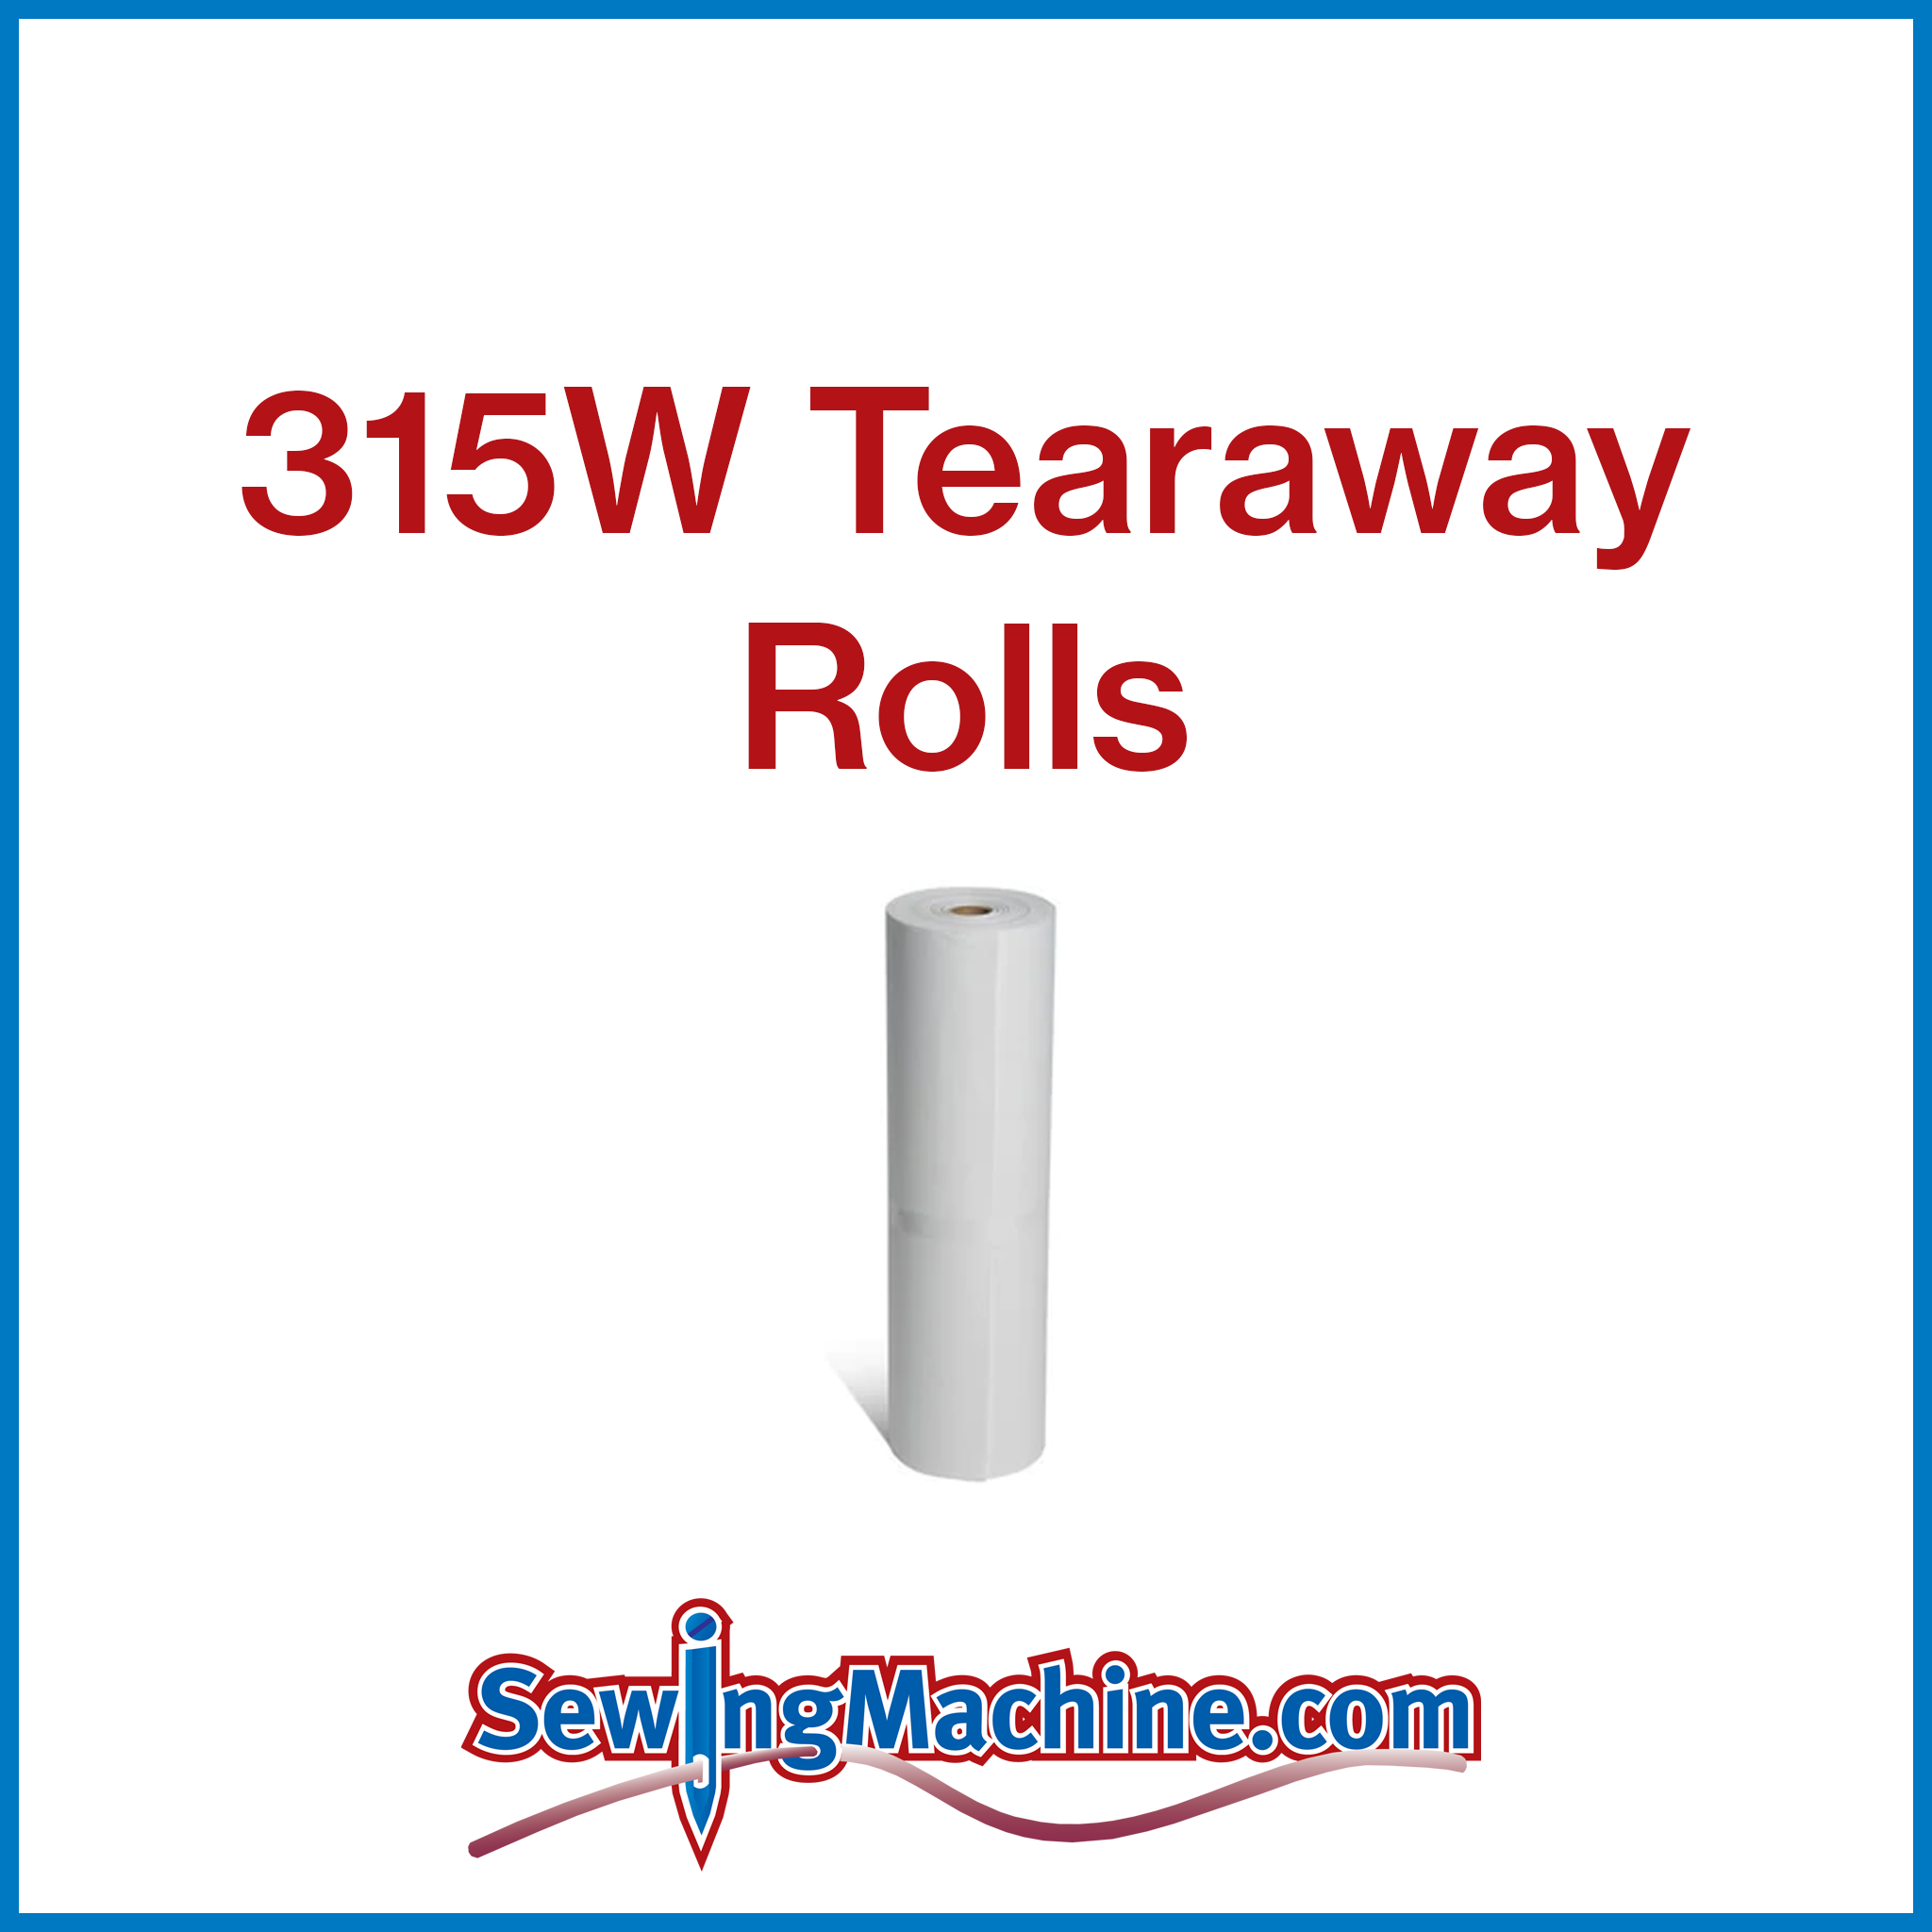 315W Tearaway Rolls